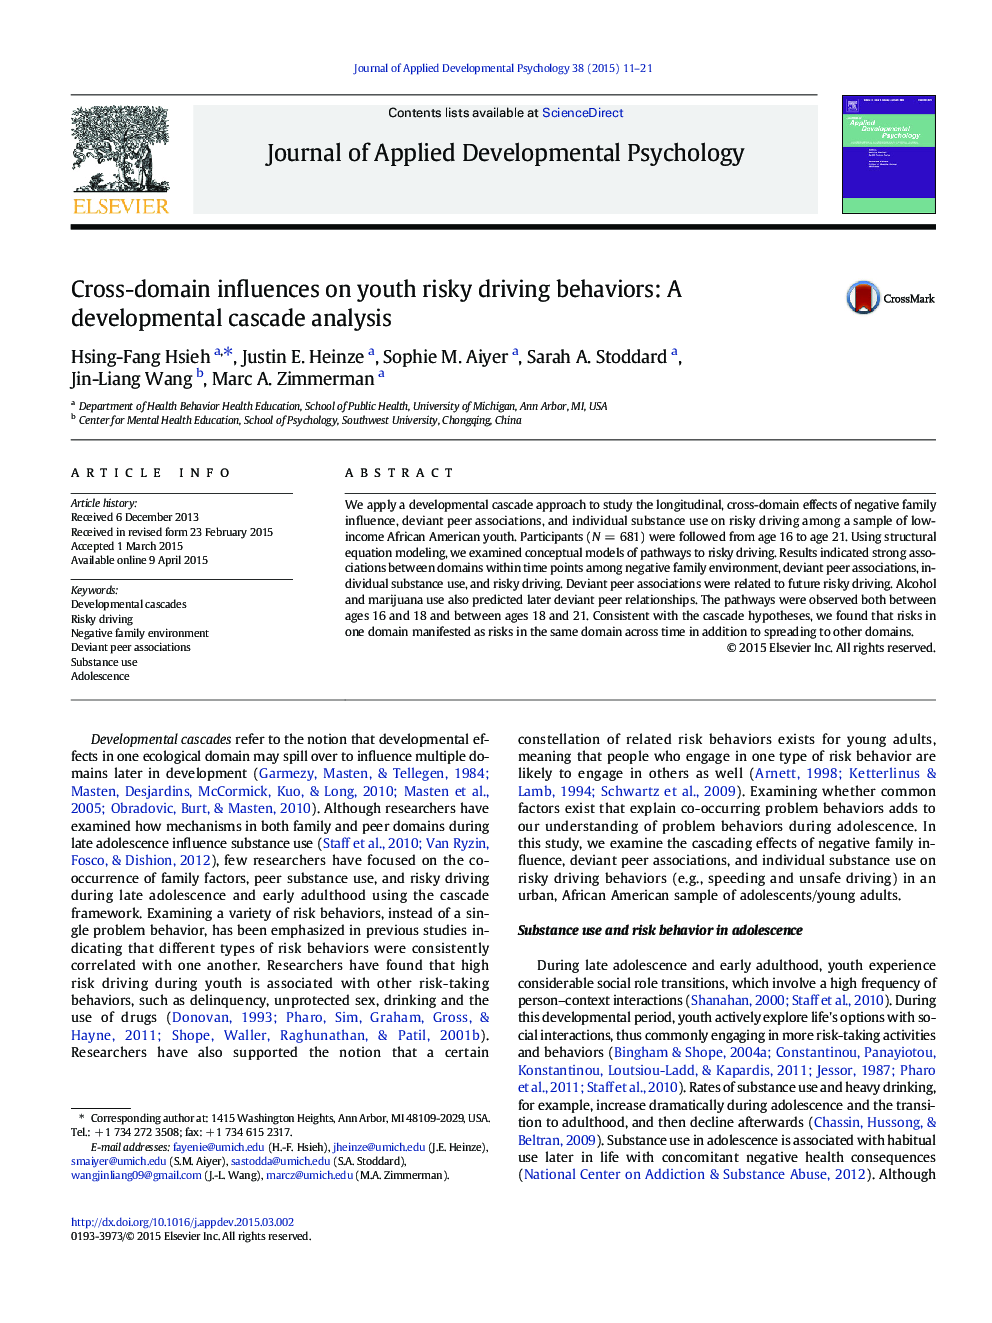 Cross-domain influences on youth risky driving behaviors: A developmental cascade analysis